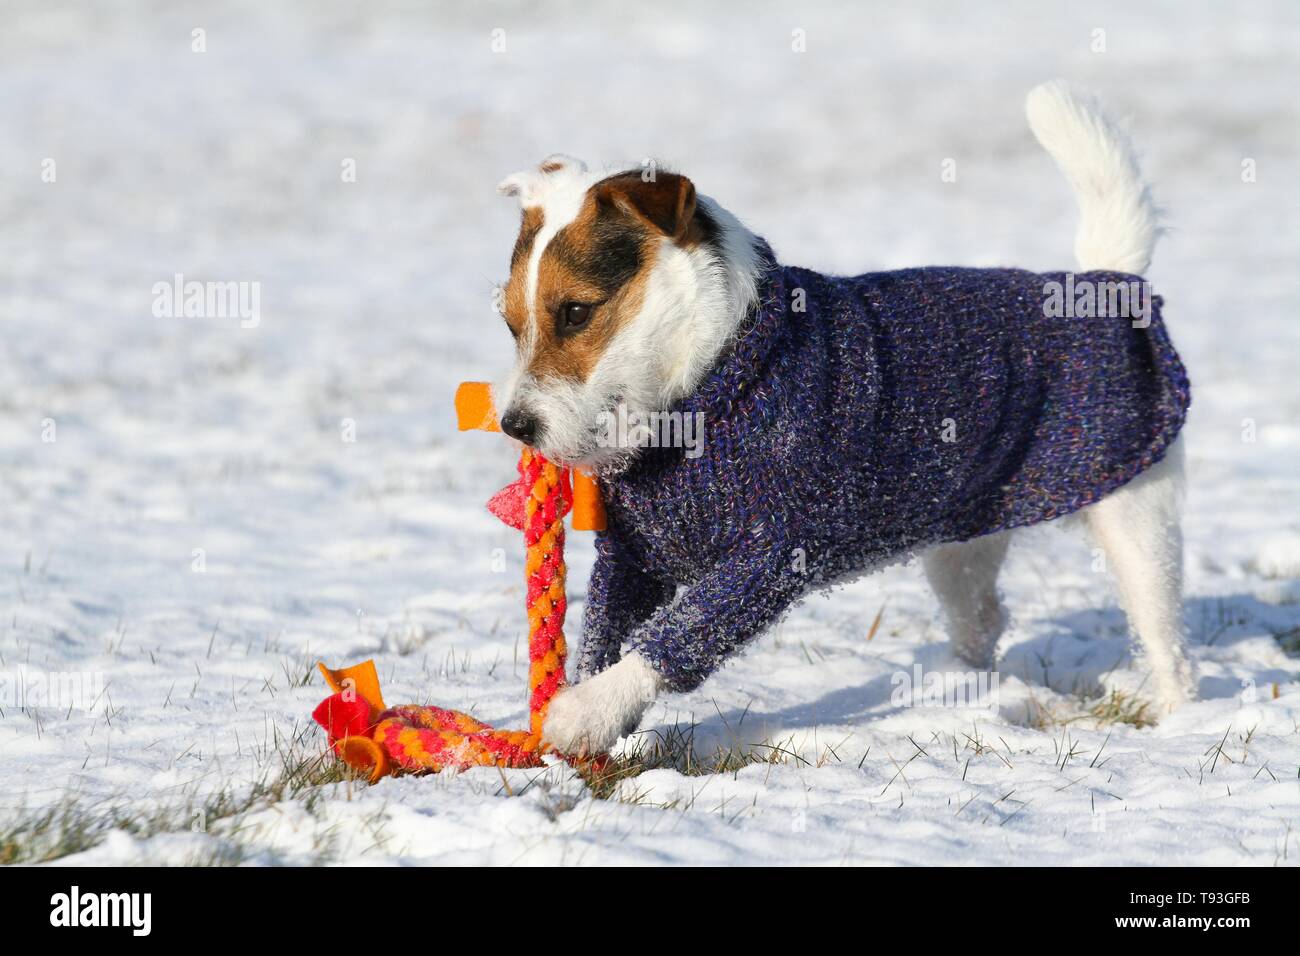 Jugar Jack Russell Terrier Foto de stock